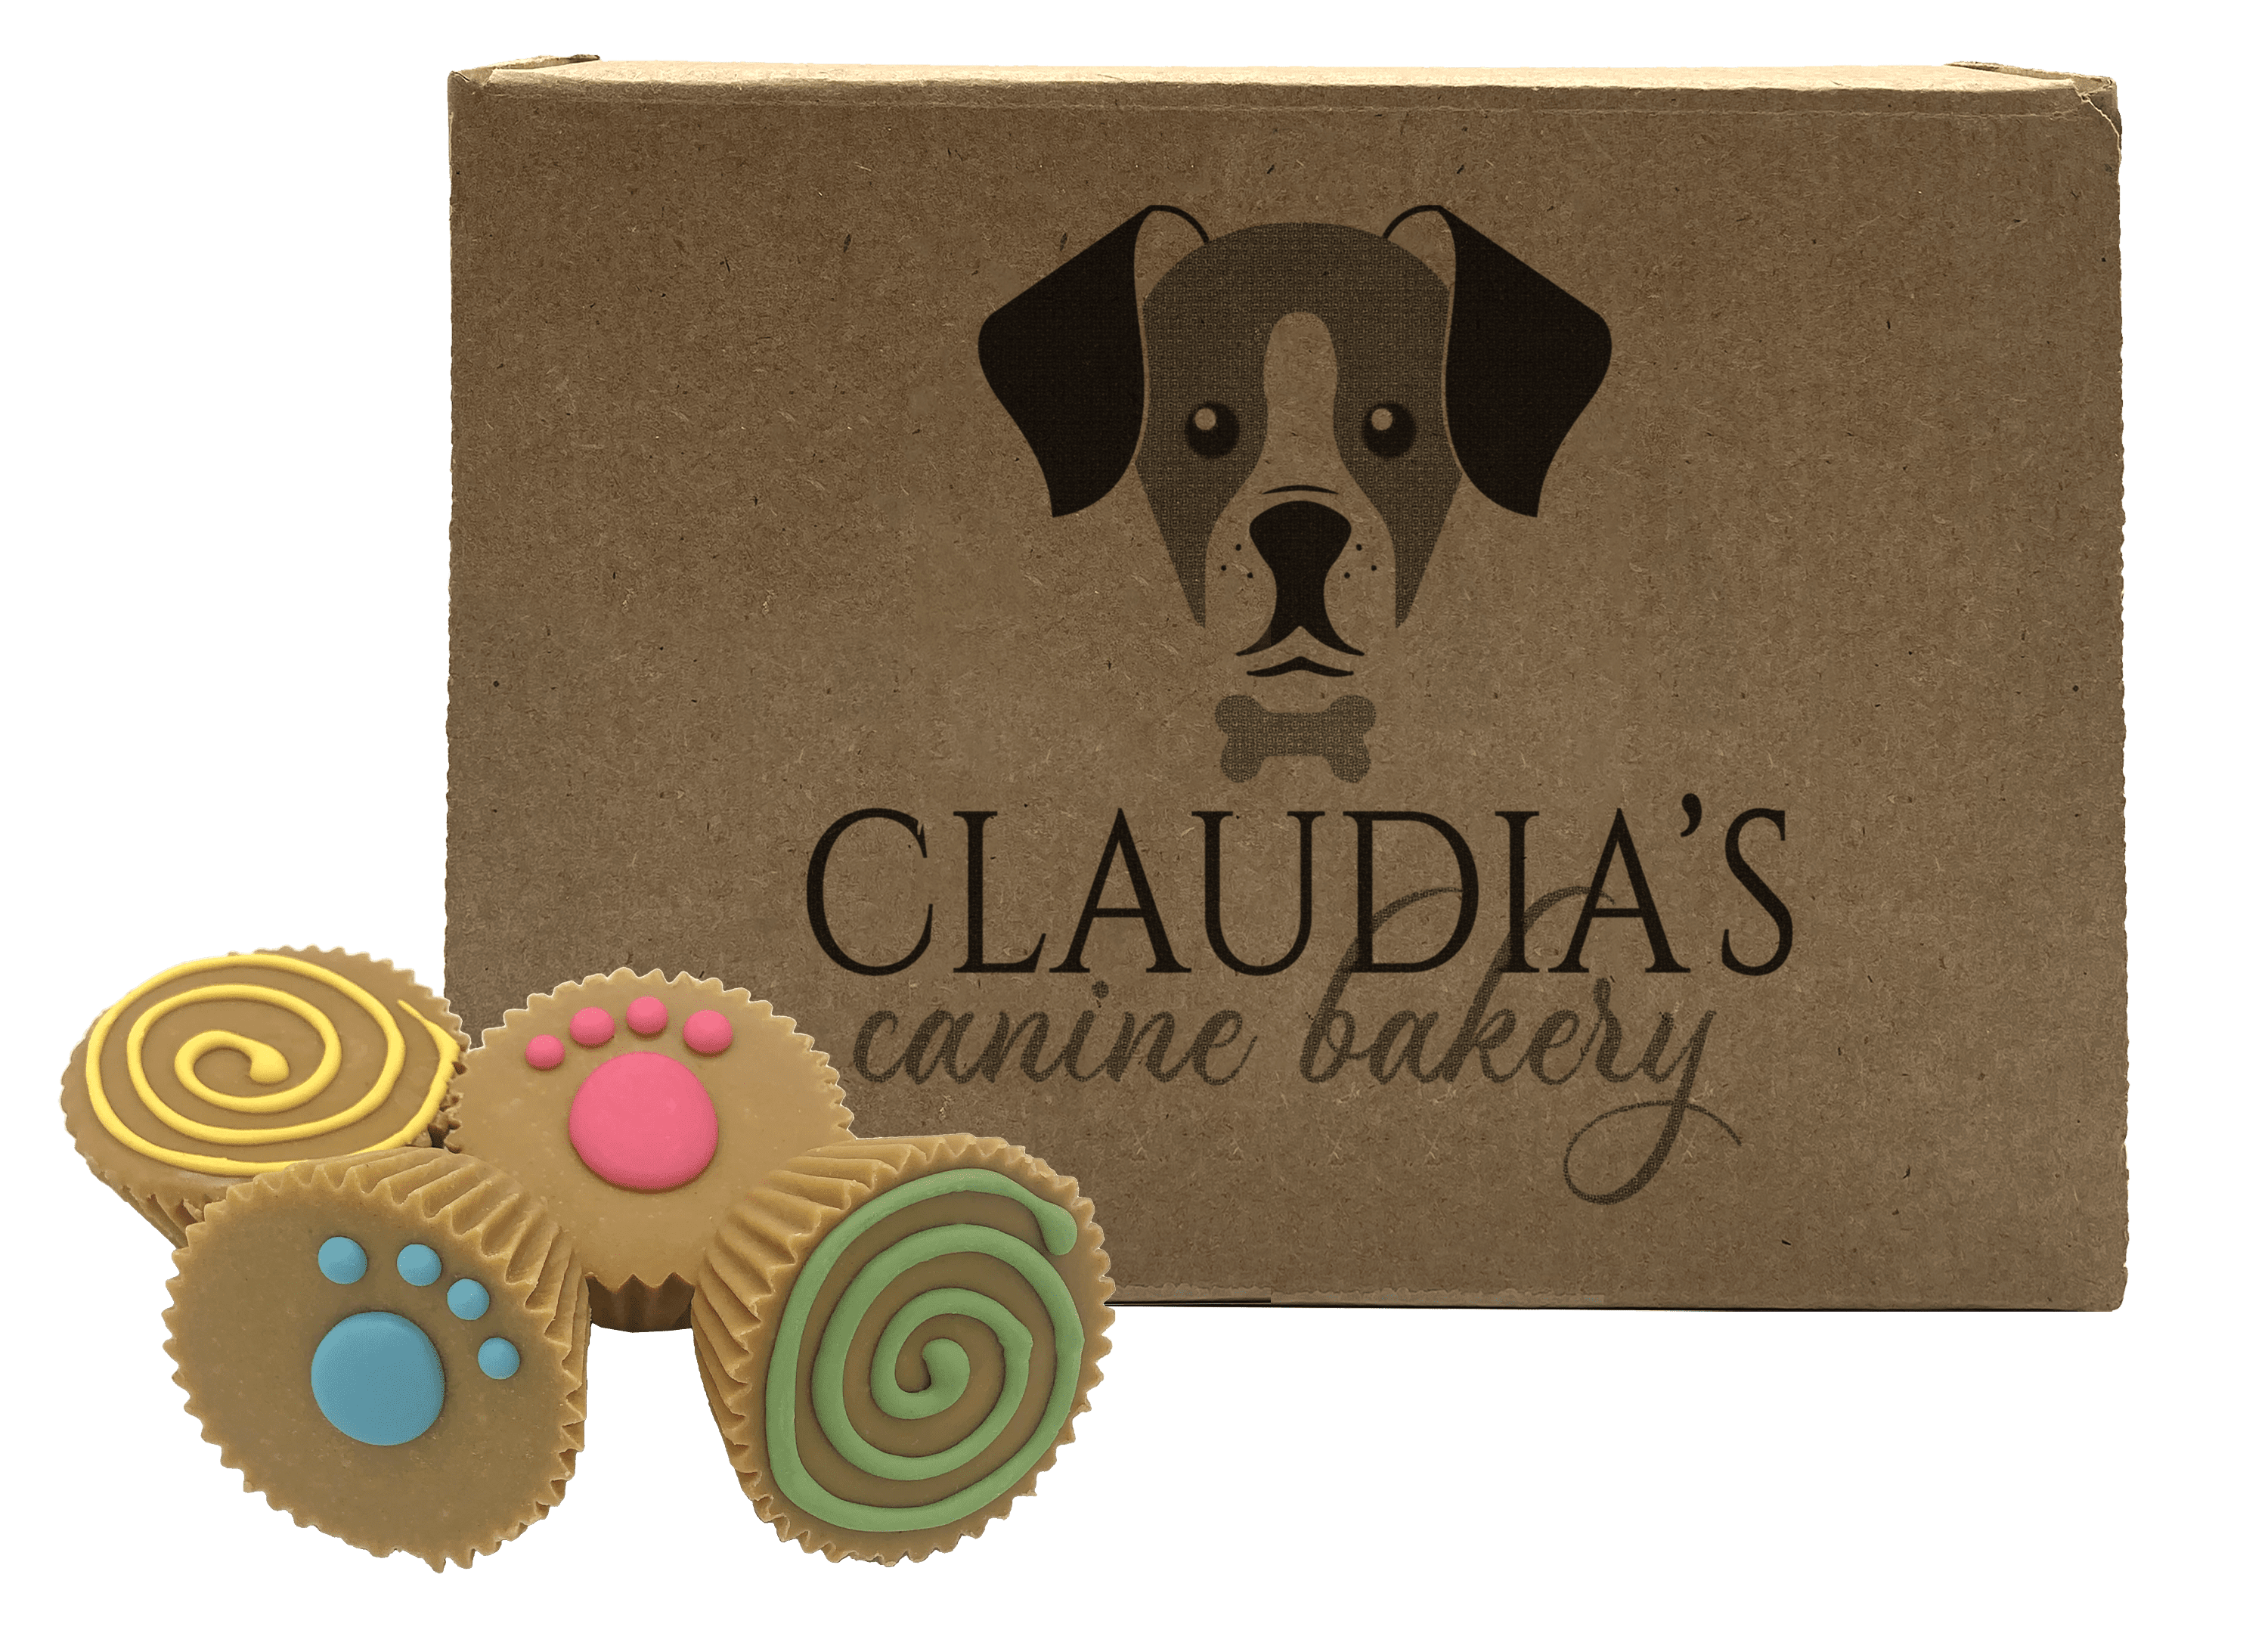 Everyday Peanut Butter Cups – 12 Treats – Claudia's Canine Bakery